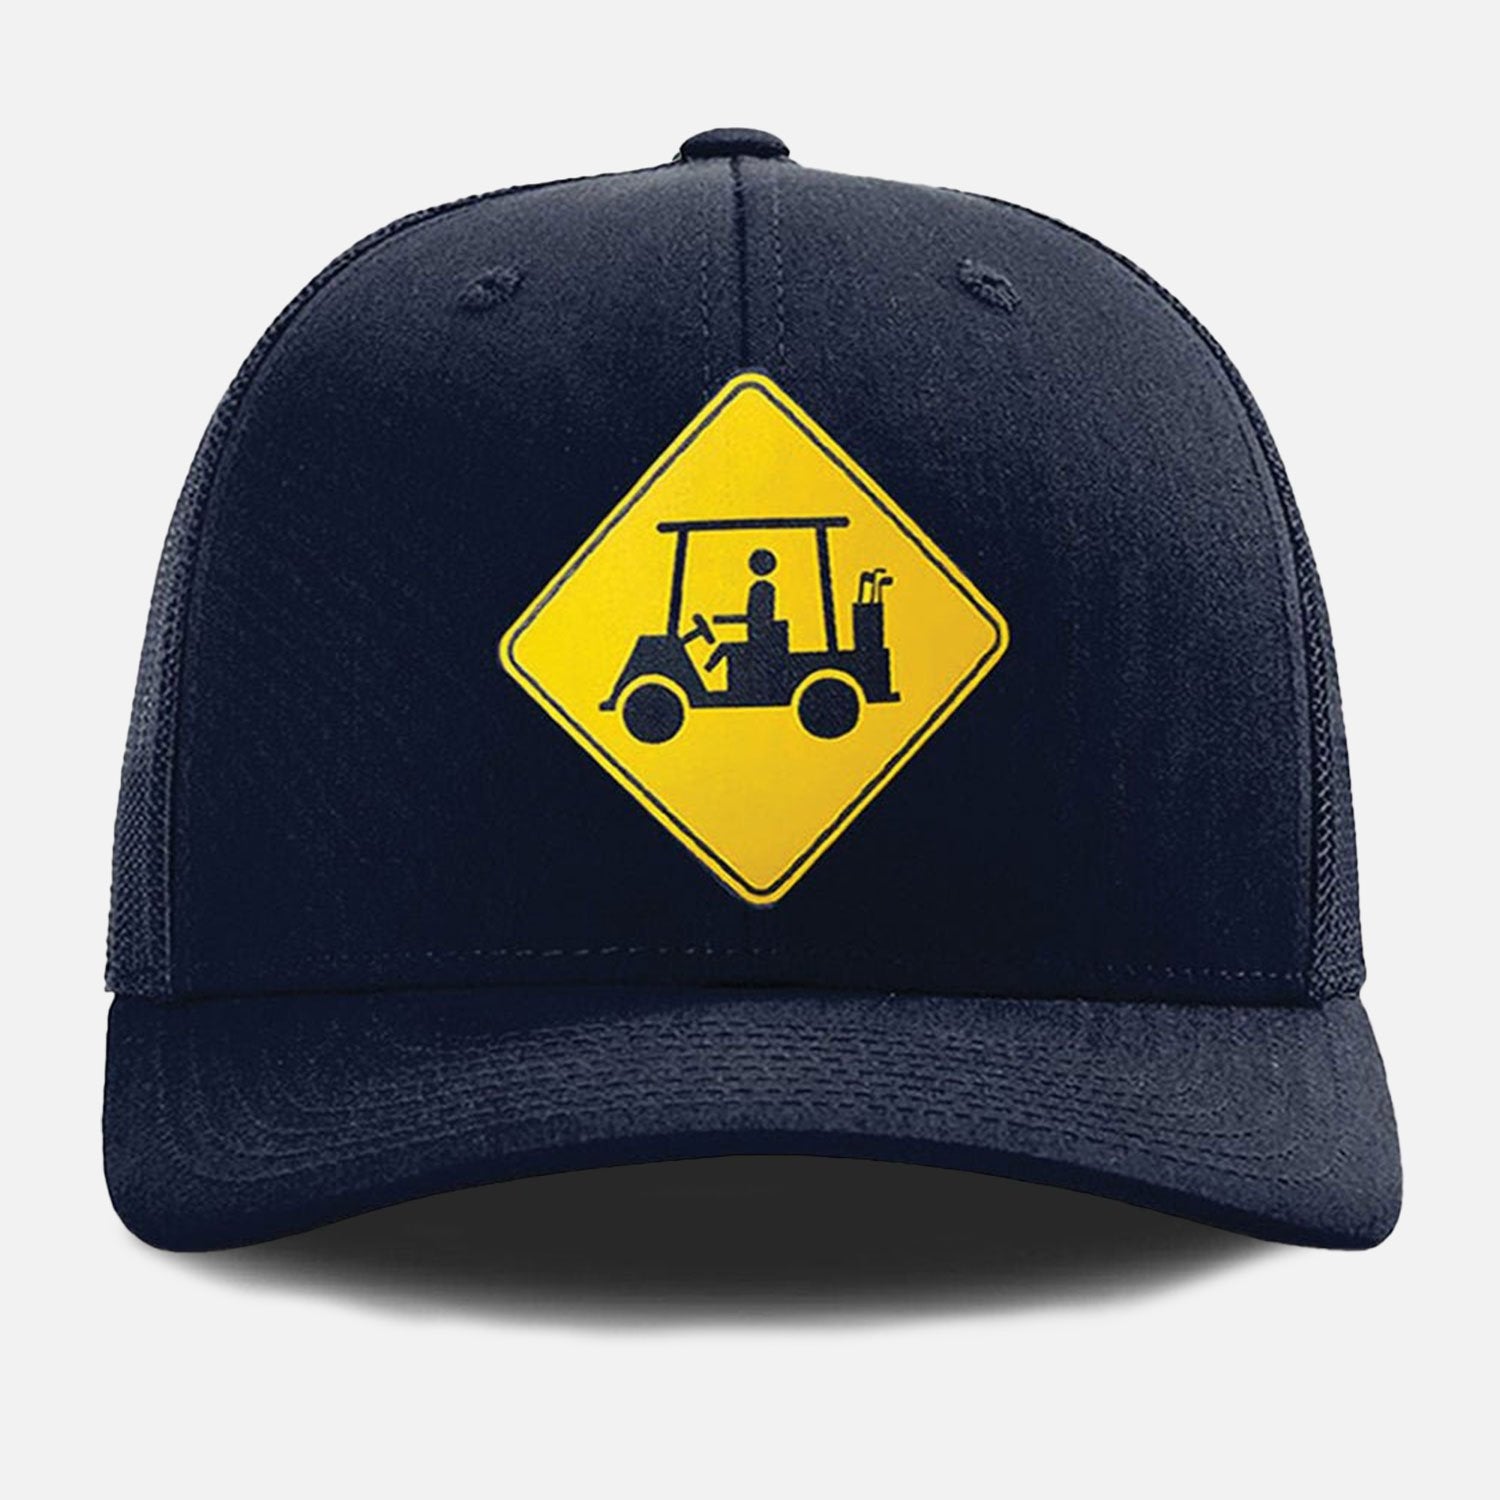 Dogleg Golf Cart Hat - F. King Golf